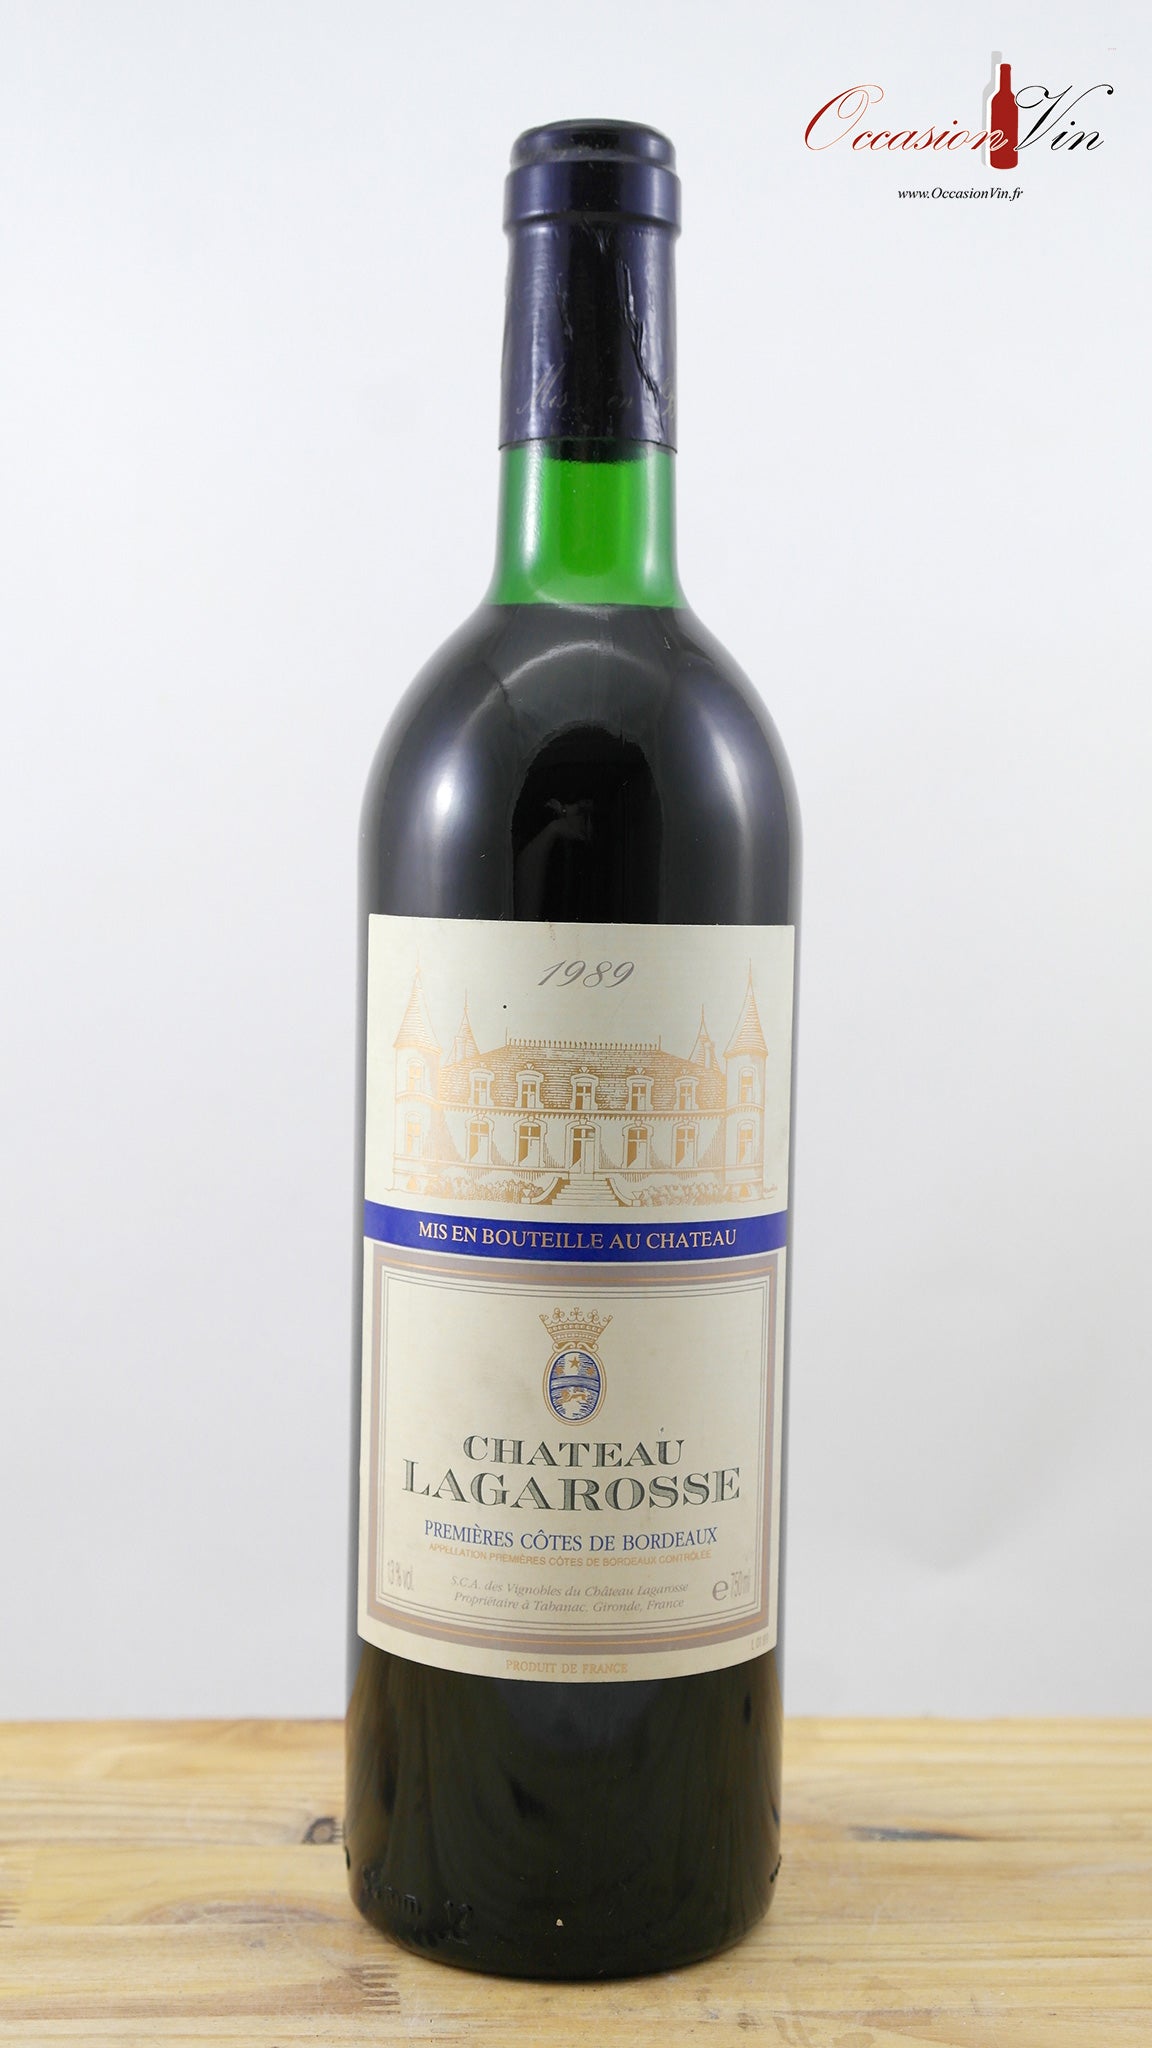 Château Lagarosse CA Vin 1989